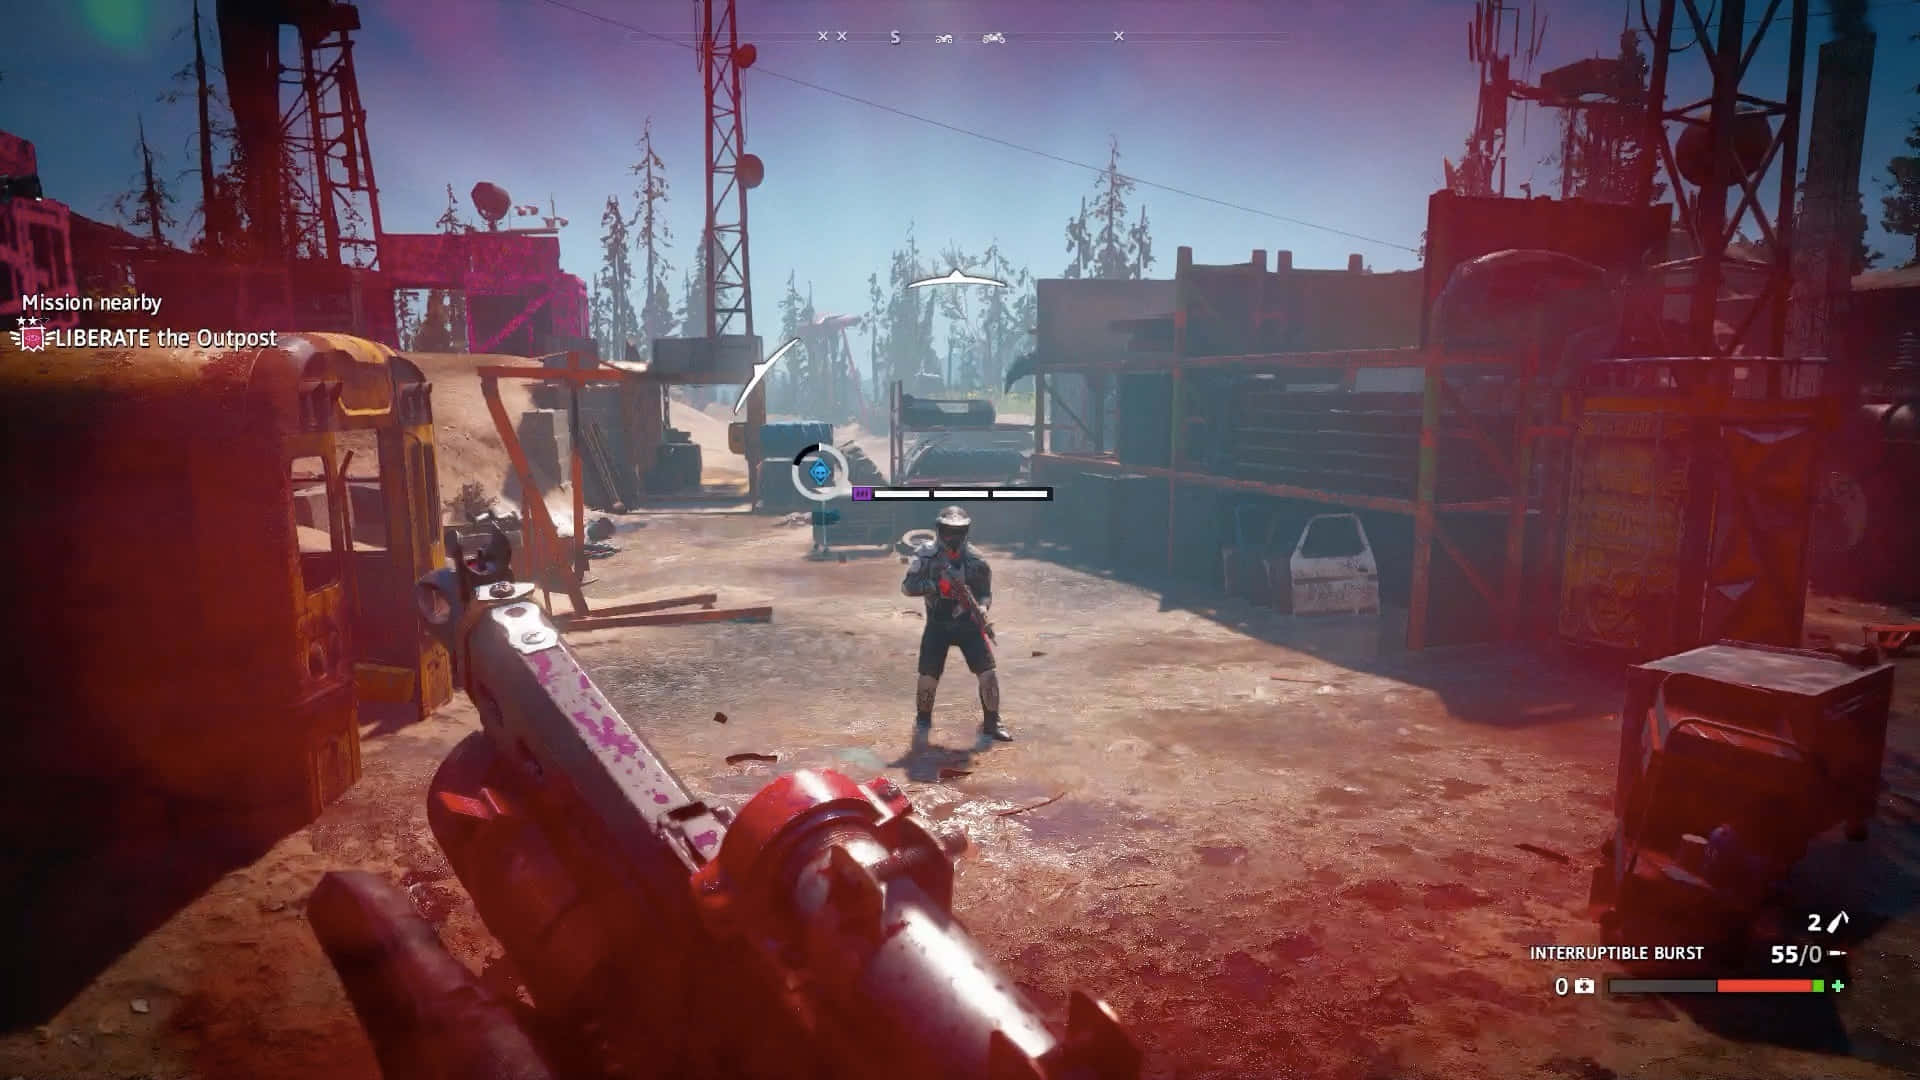 A Screenshot Of A Video Game Showing A Gun In A City